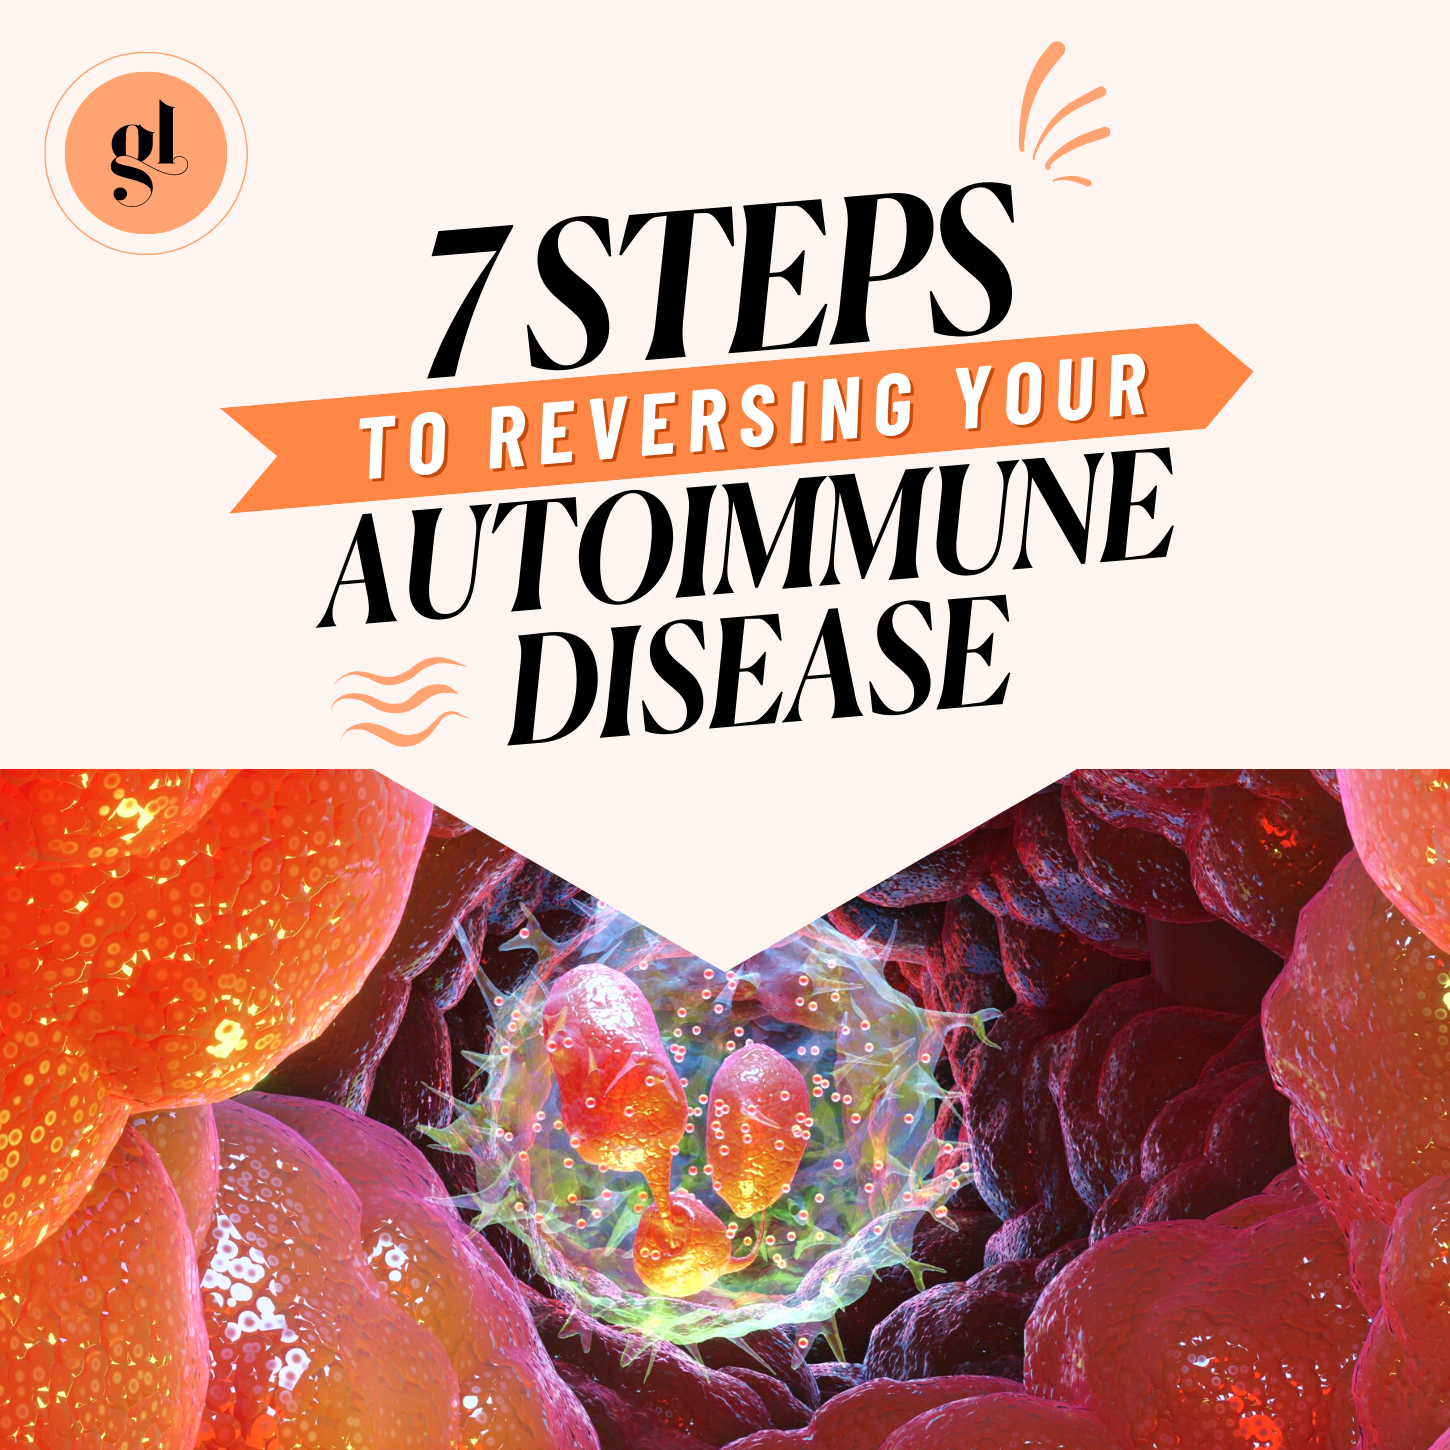 7 Steps to Reversing Your Autoimmune Disease